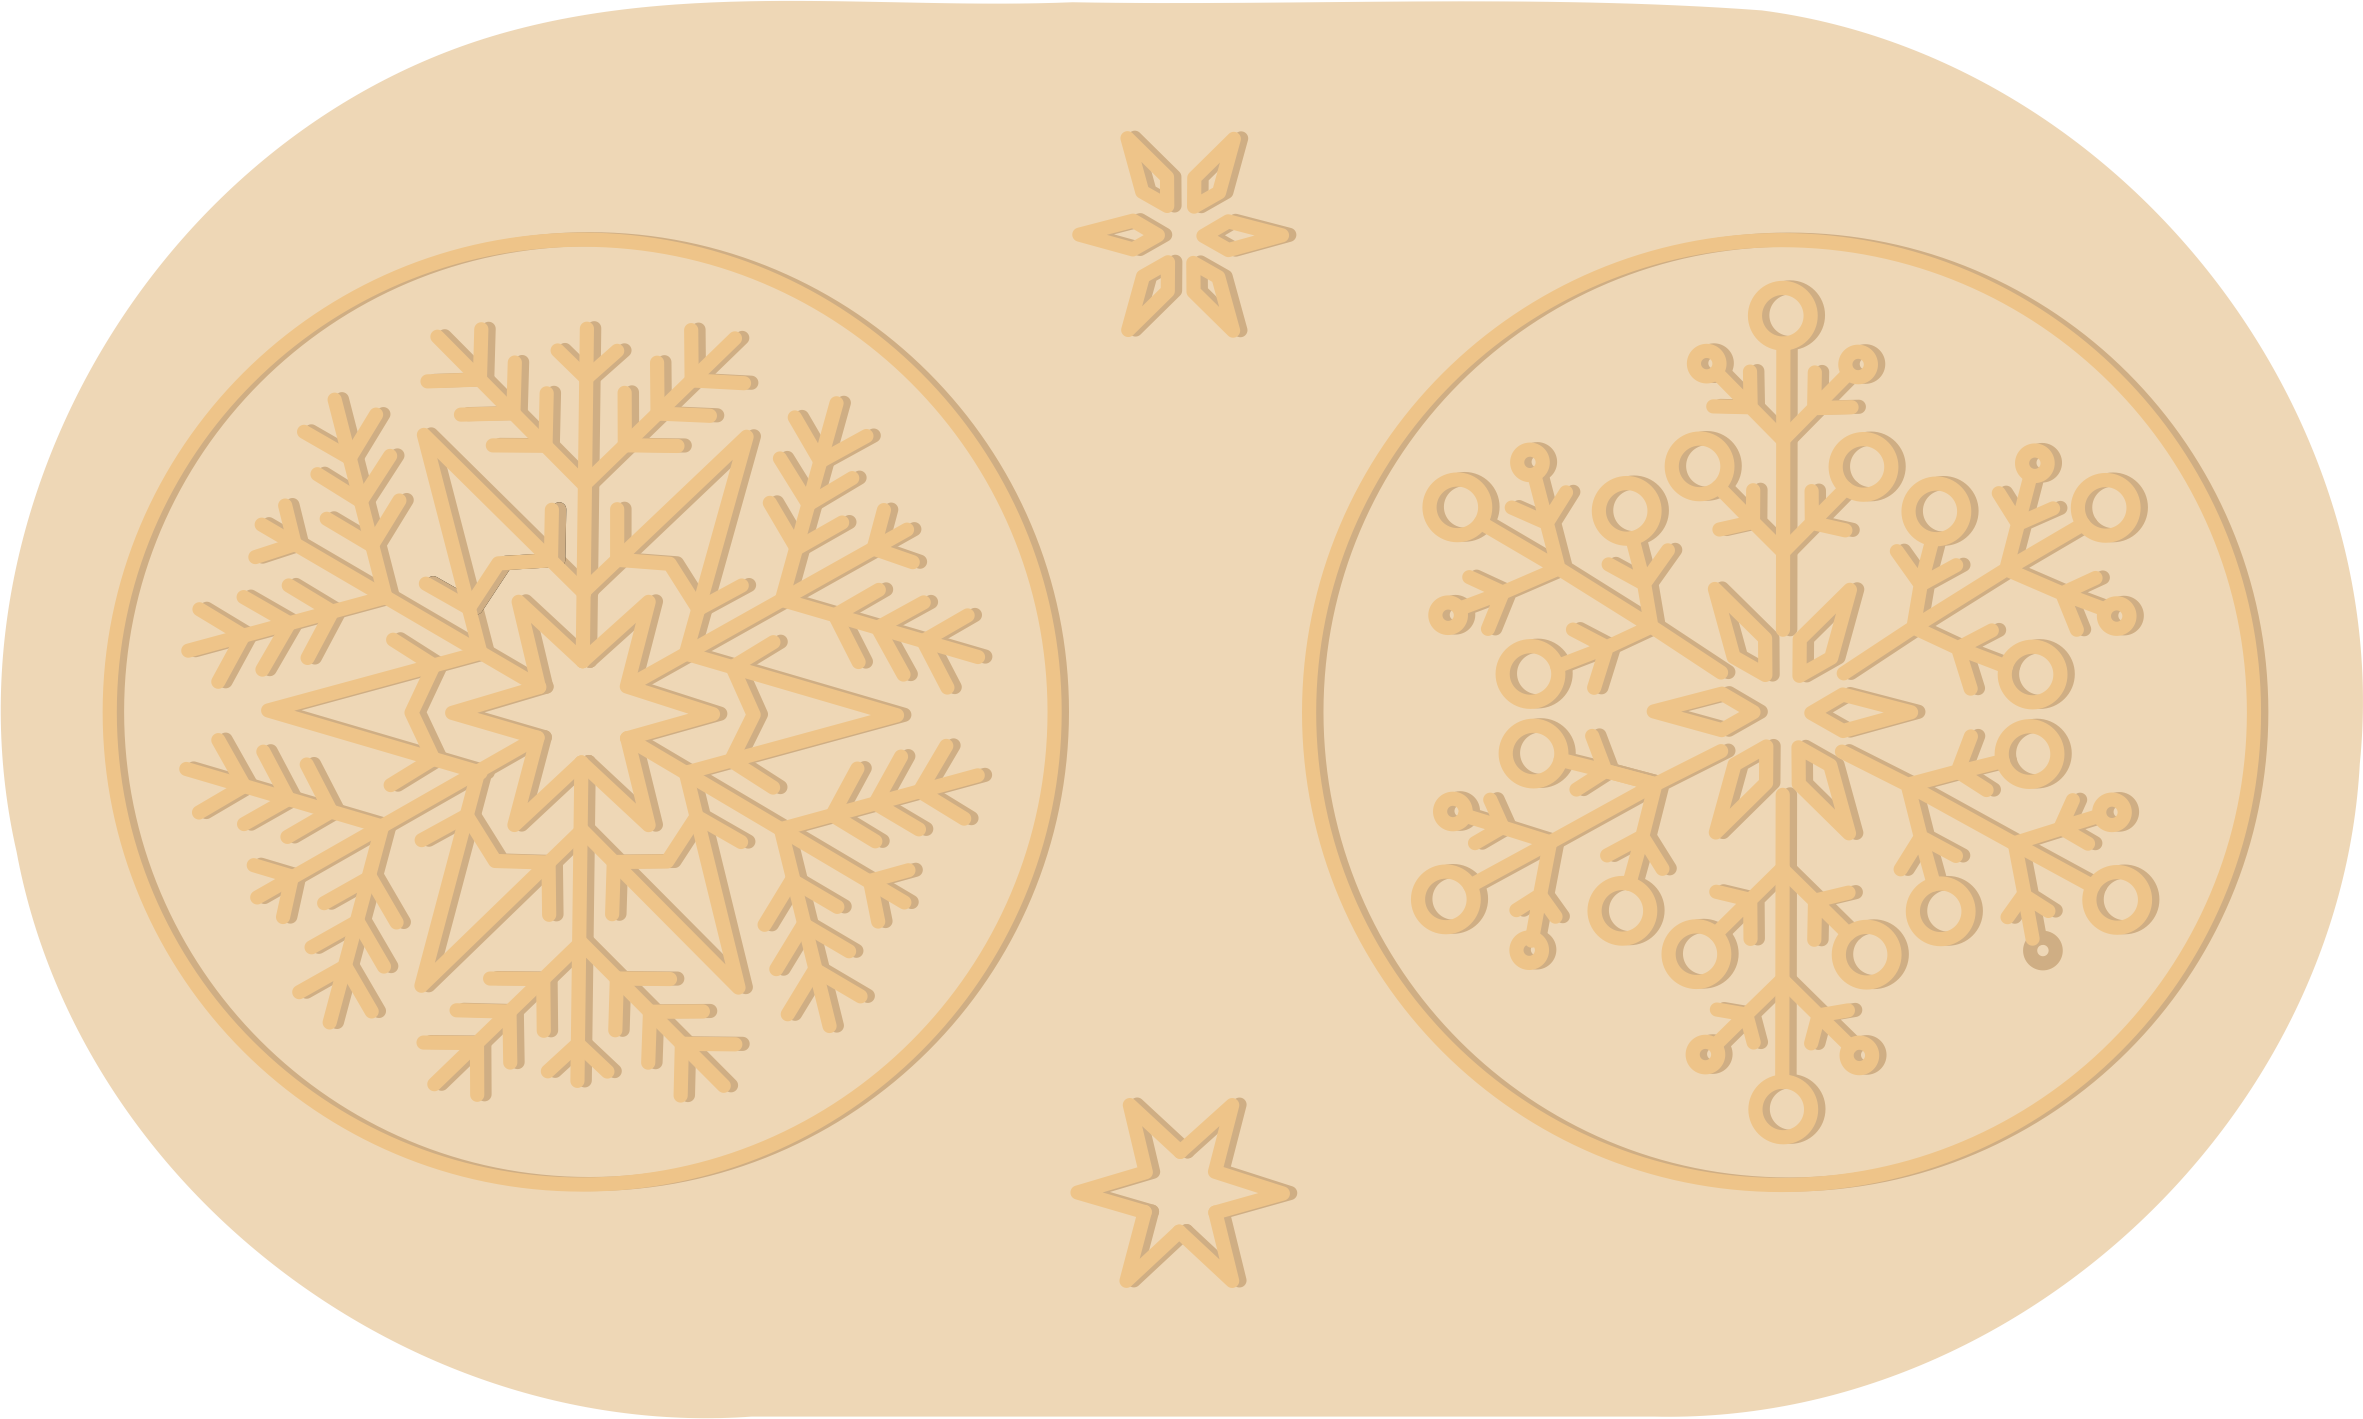 Wafee - snowflake design